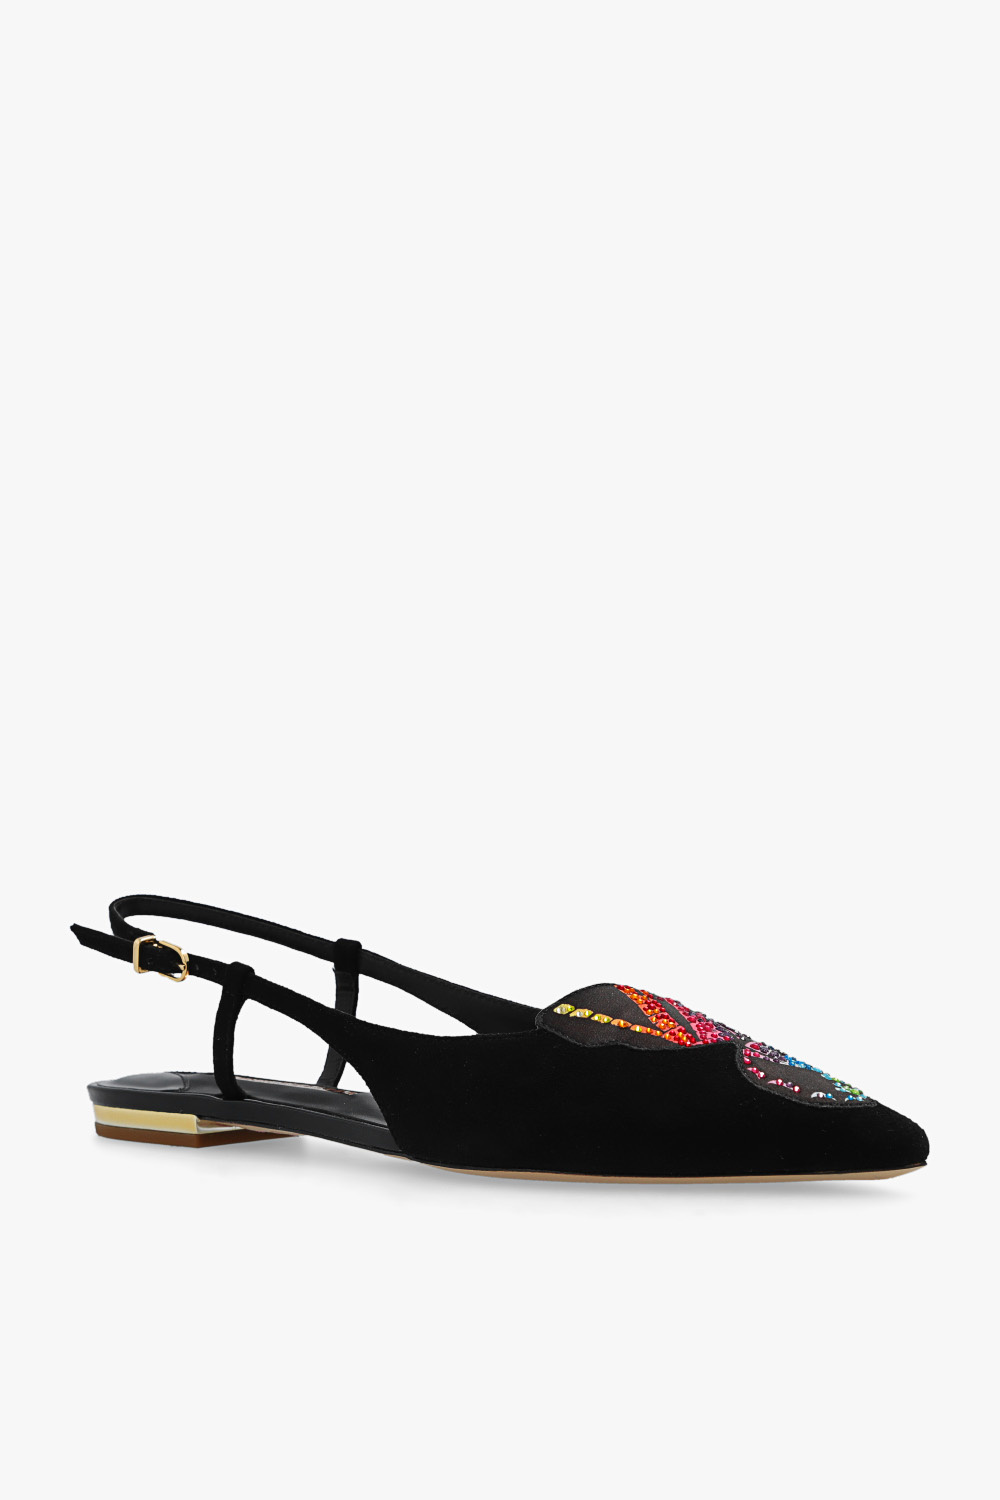 Sophia Webster ‘Butterfly’ suede shoes